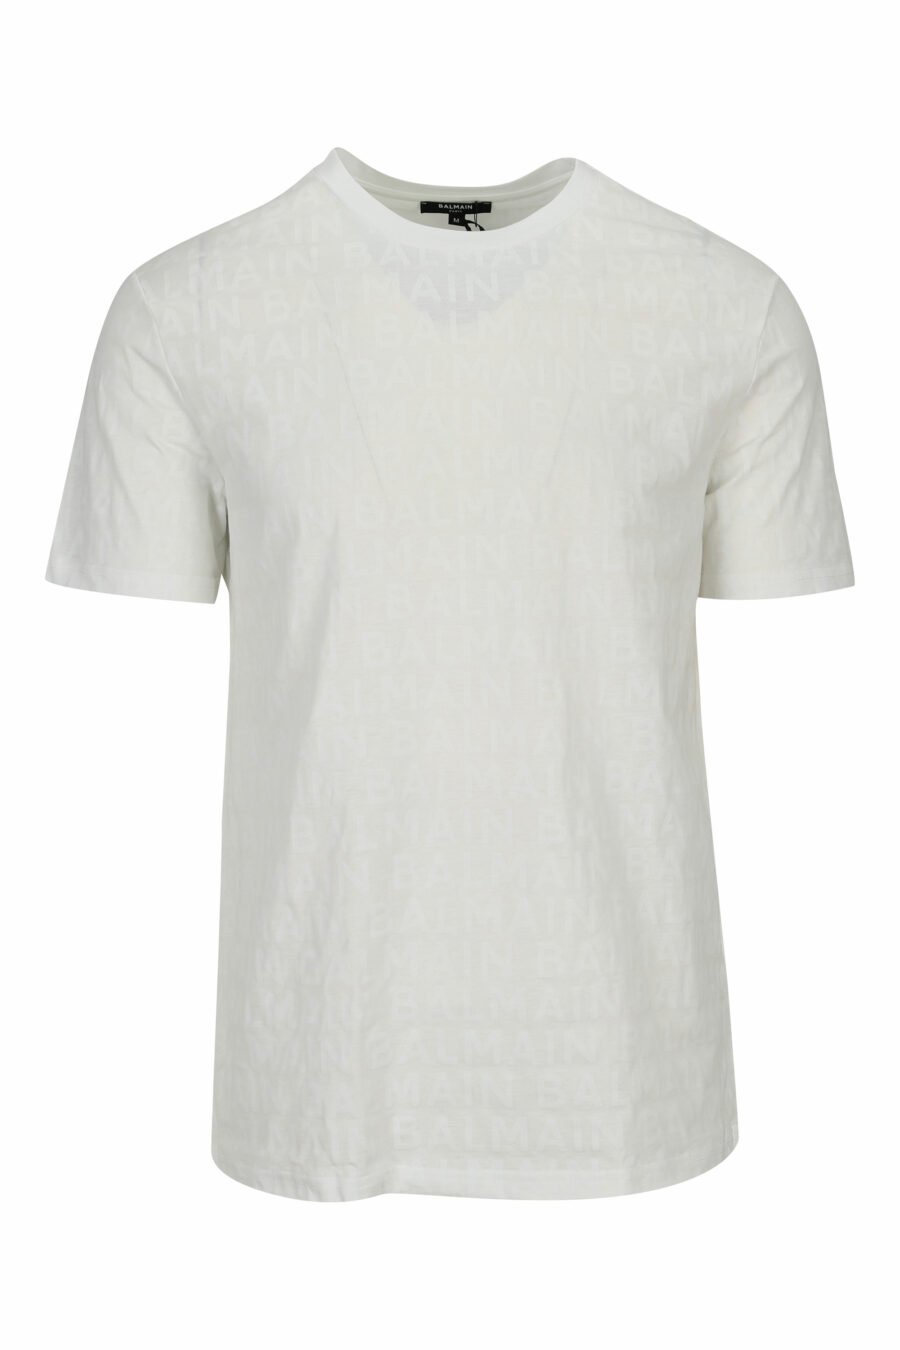 White T-shirt with monochrome monogram - 8032674525390